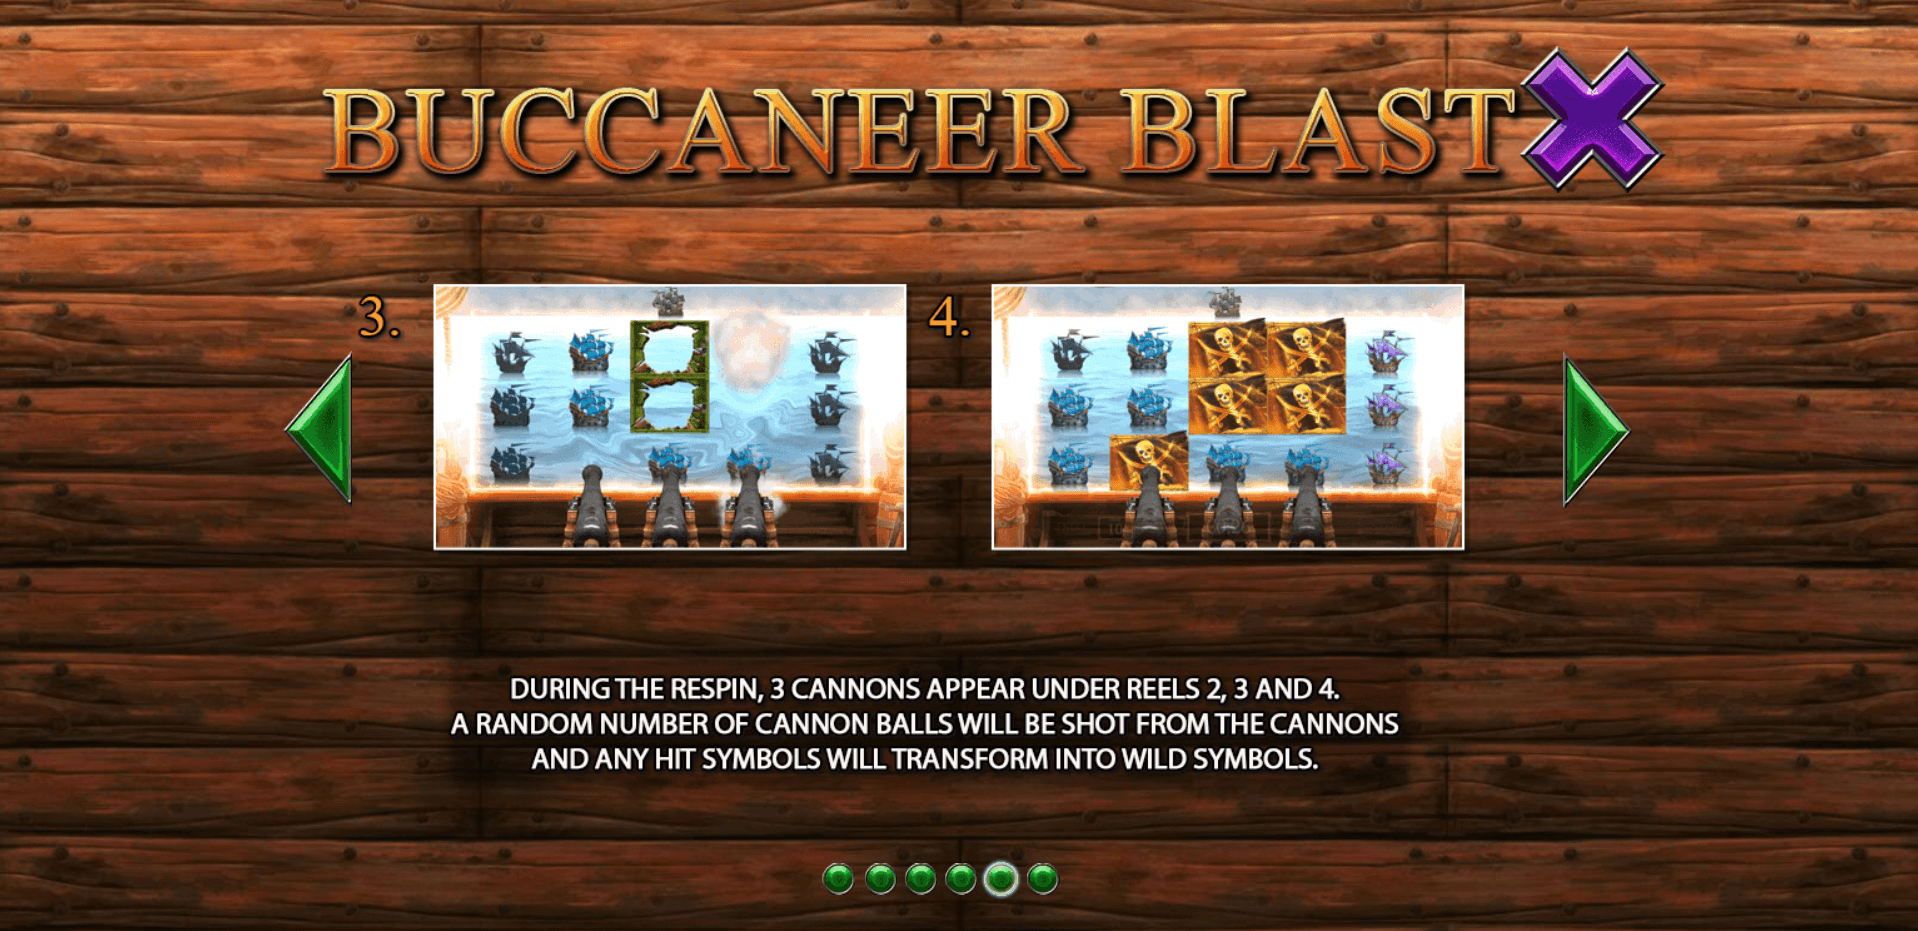 buccaneer blast slot machine detail image 4